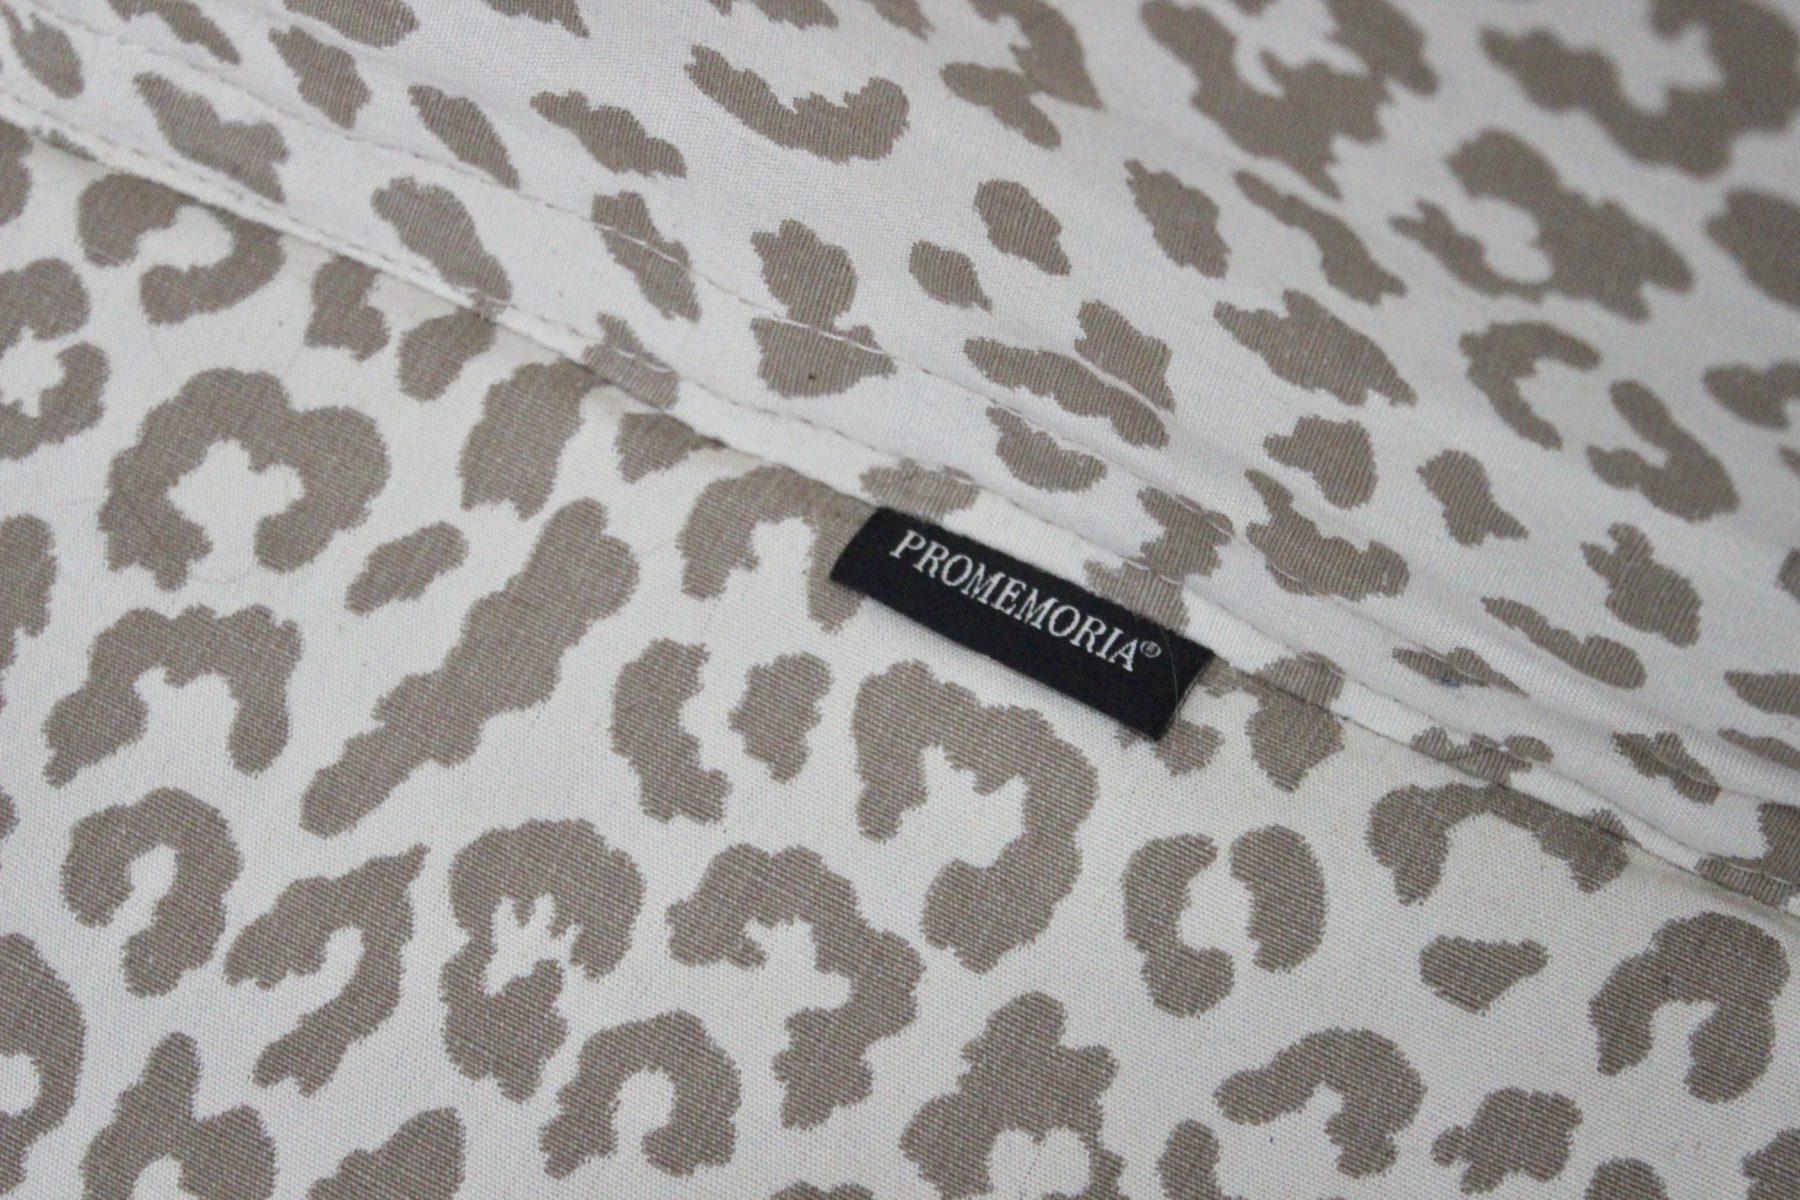 Promemoria “Wanda” 2.5-Seat Sofa in Leopard-Print Fabric For Sale 4